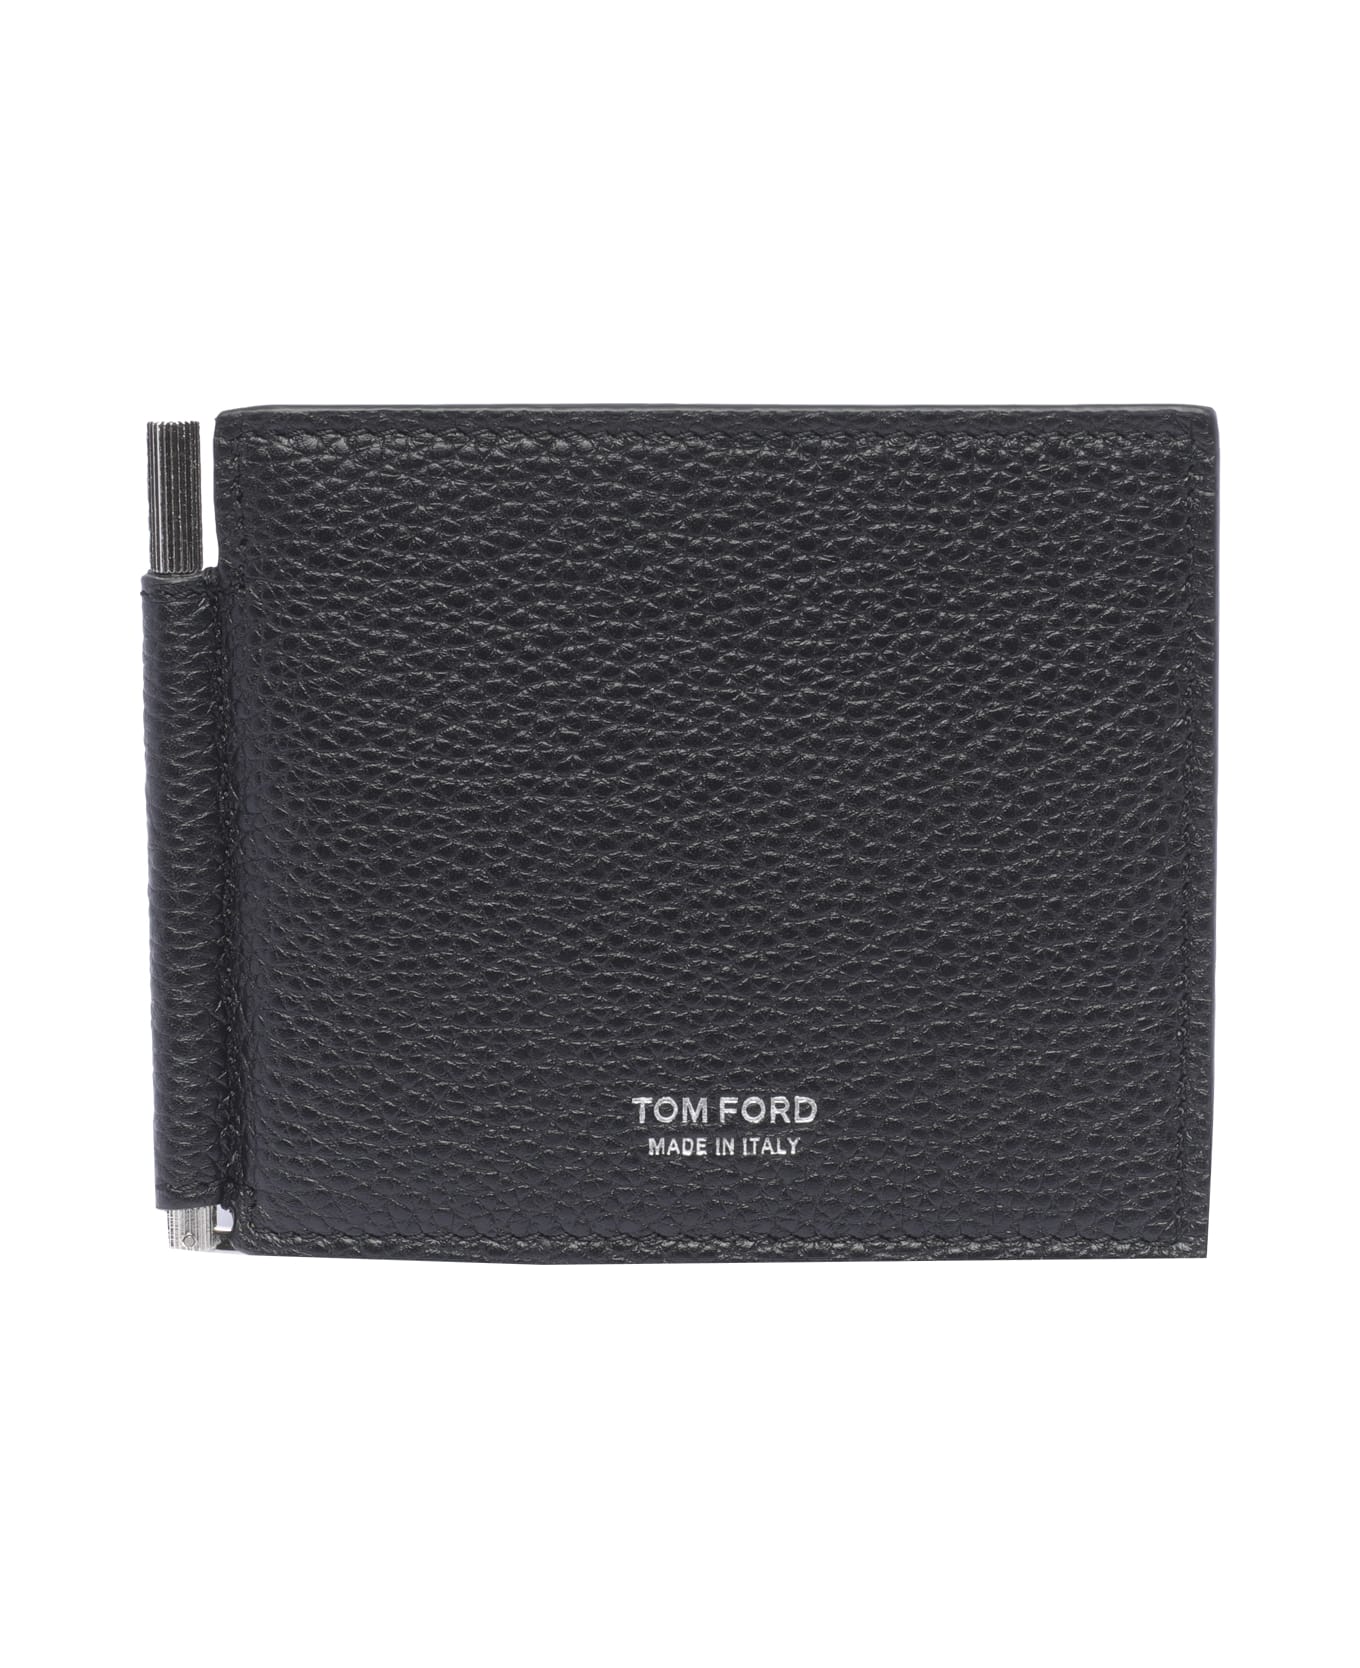 Tom Ford Logo Wallet - Black 財布